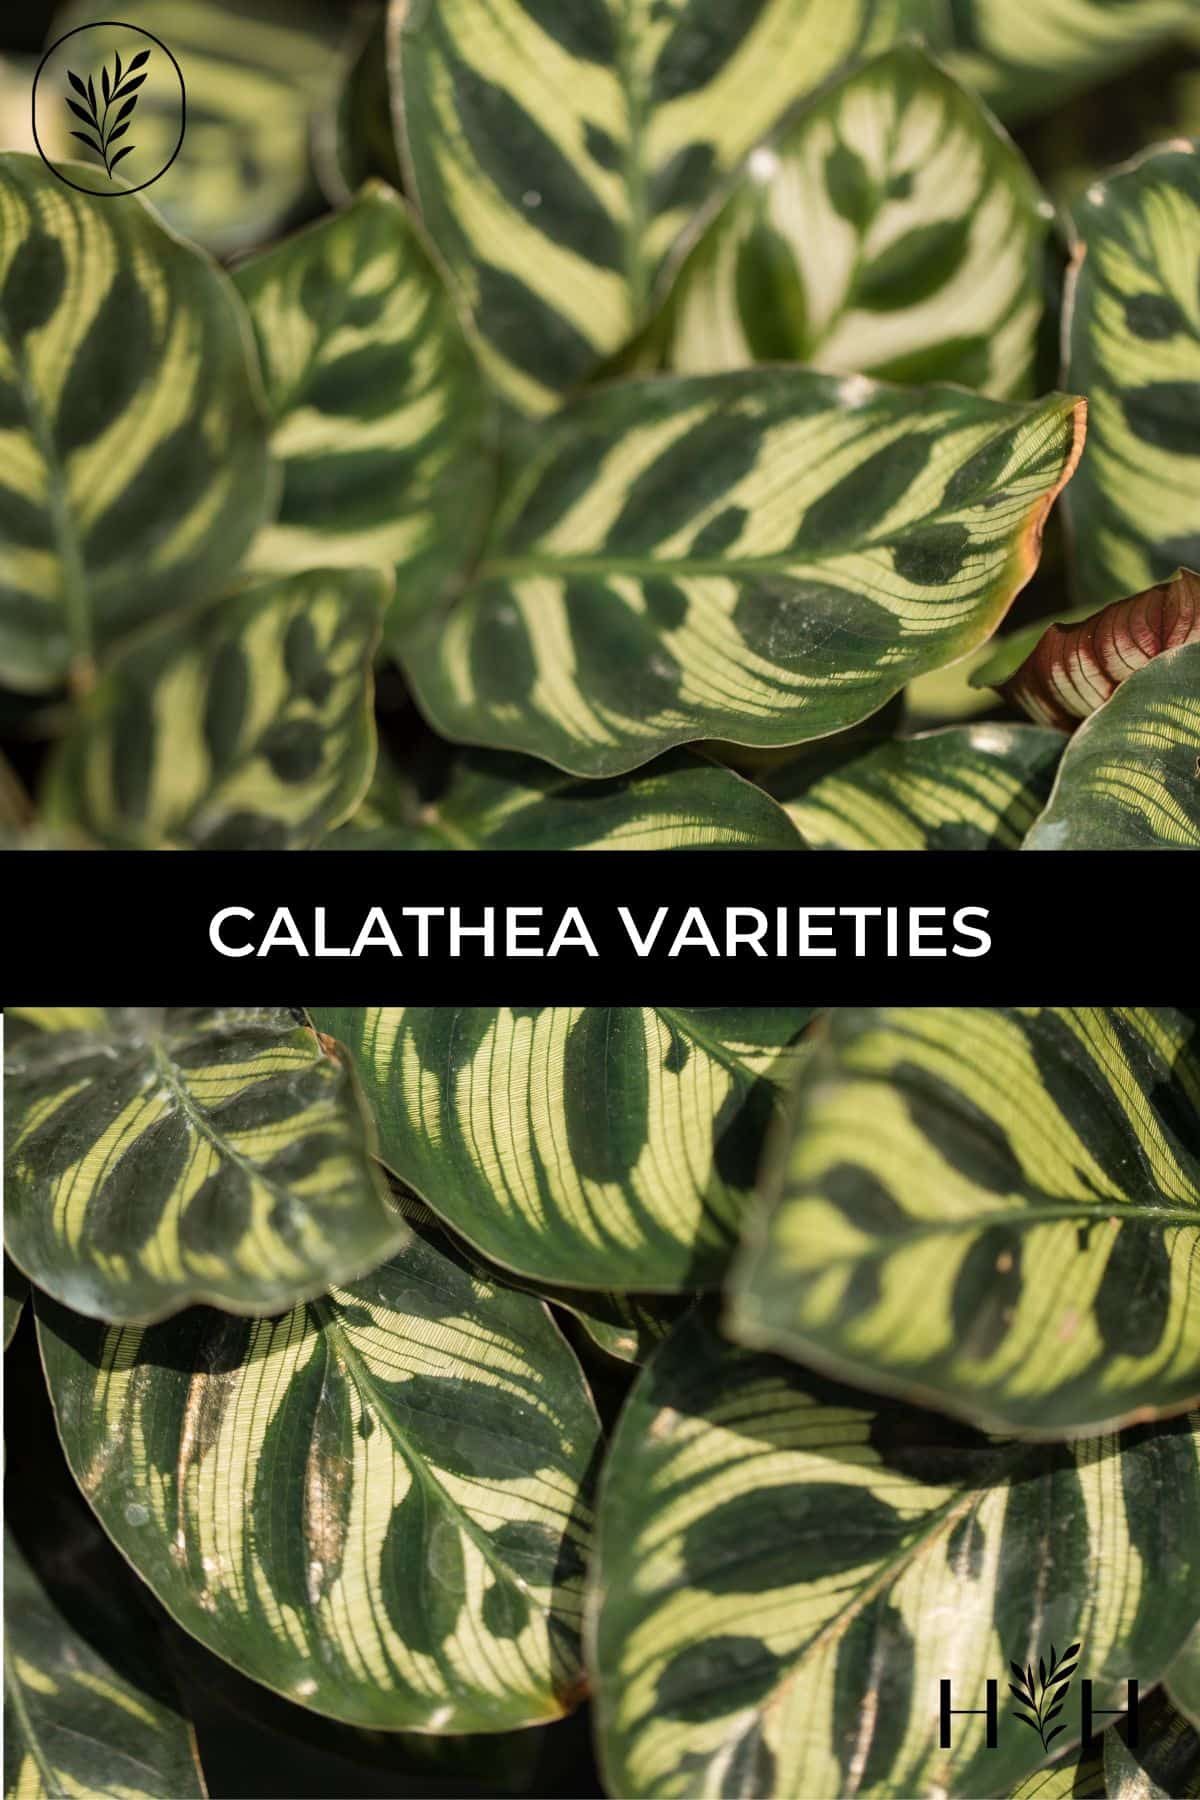 Calathea varieties via @home4theharvest